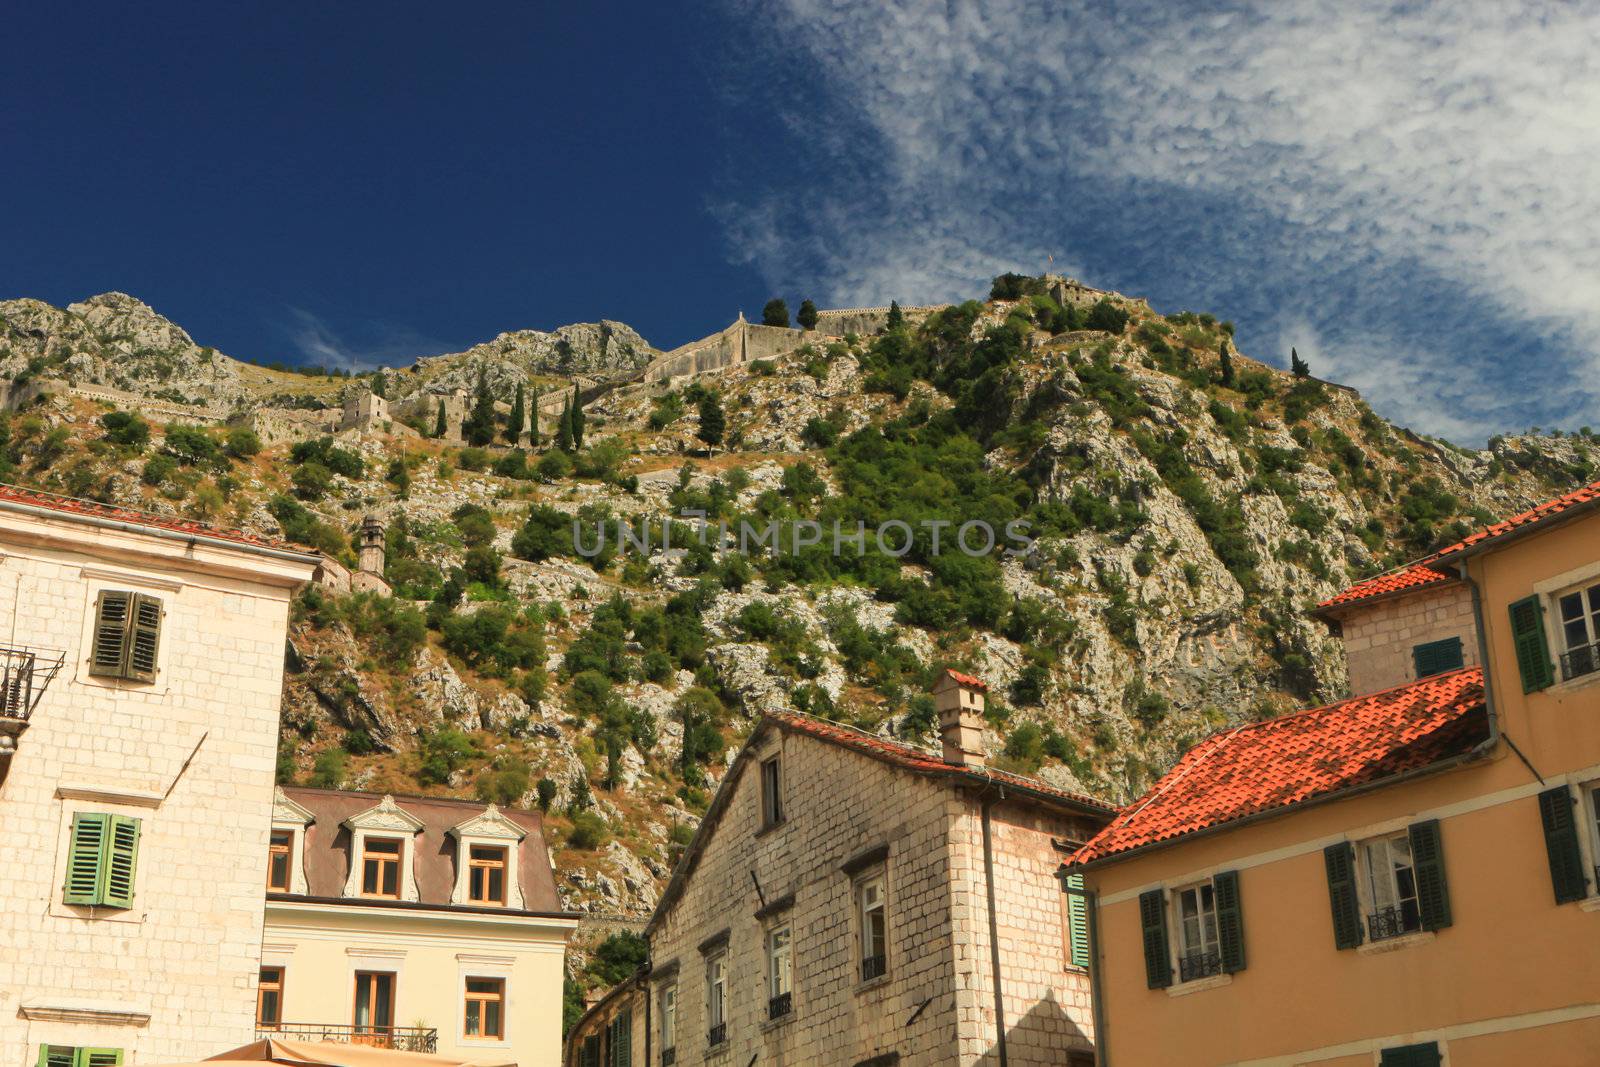 Kotor Fortress Wall by jasonvosper